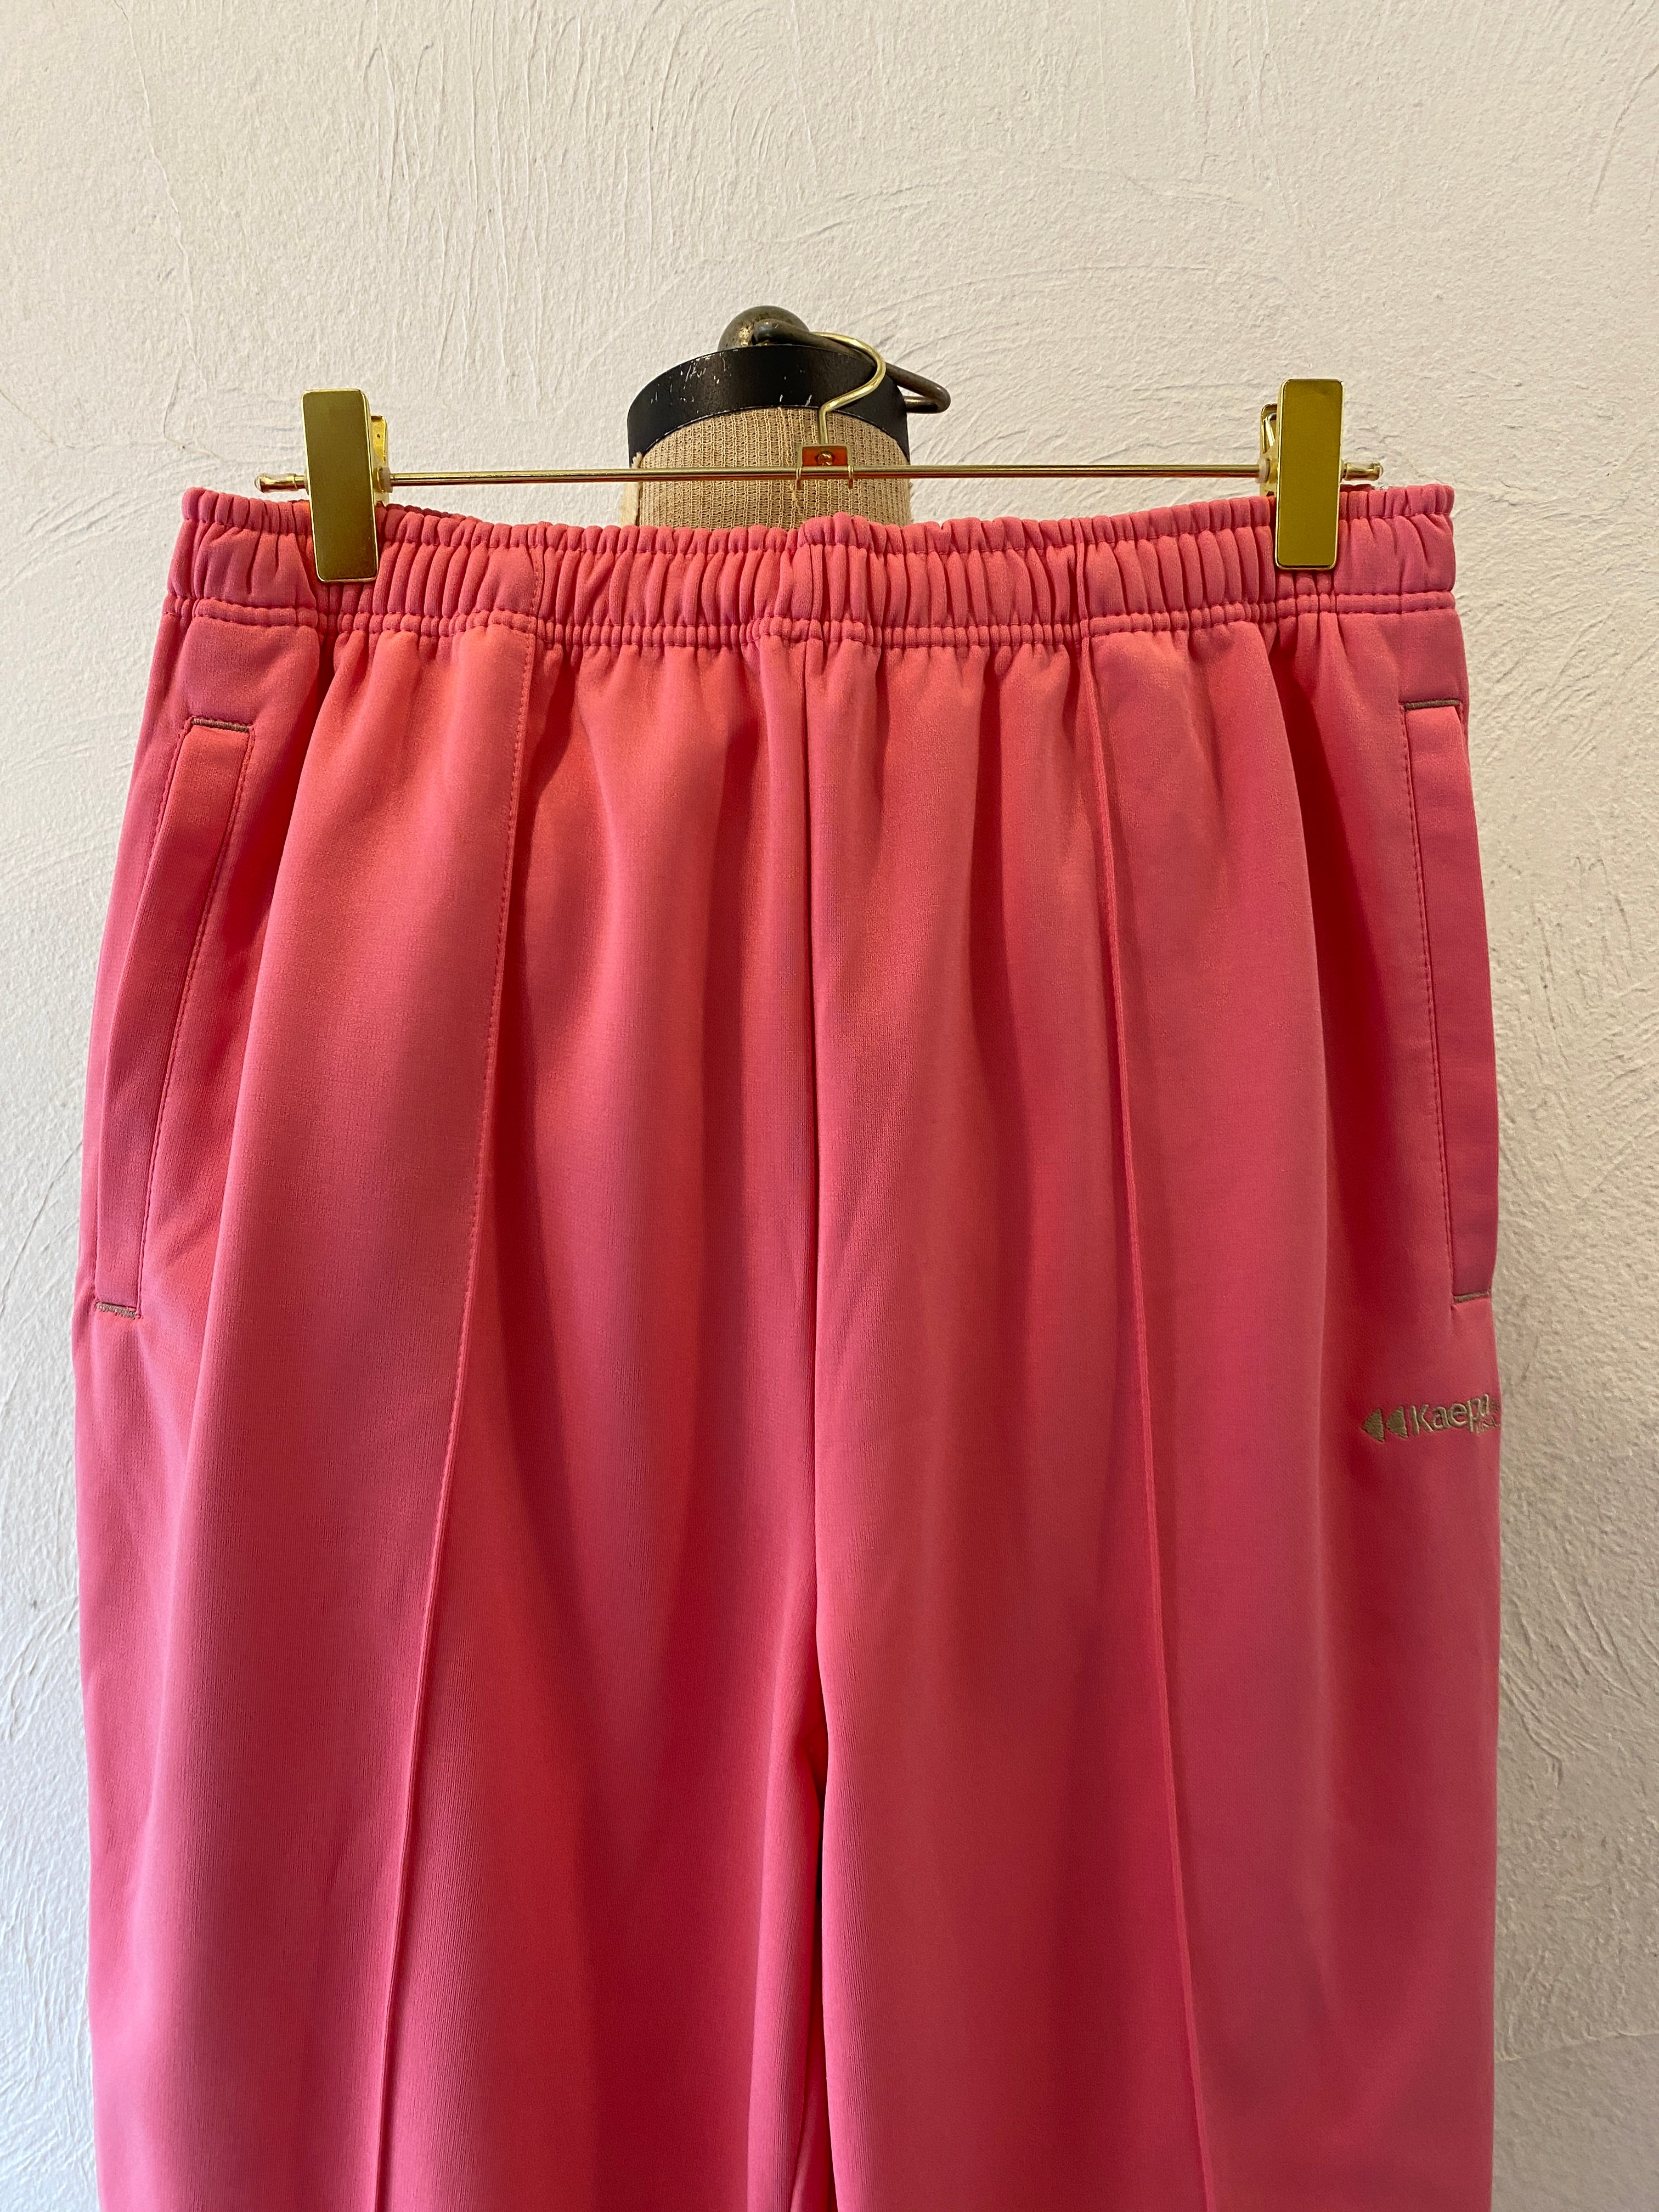 silver line pink pants